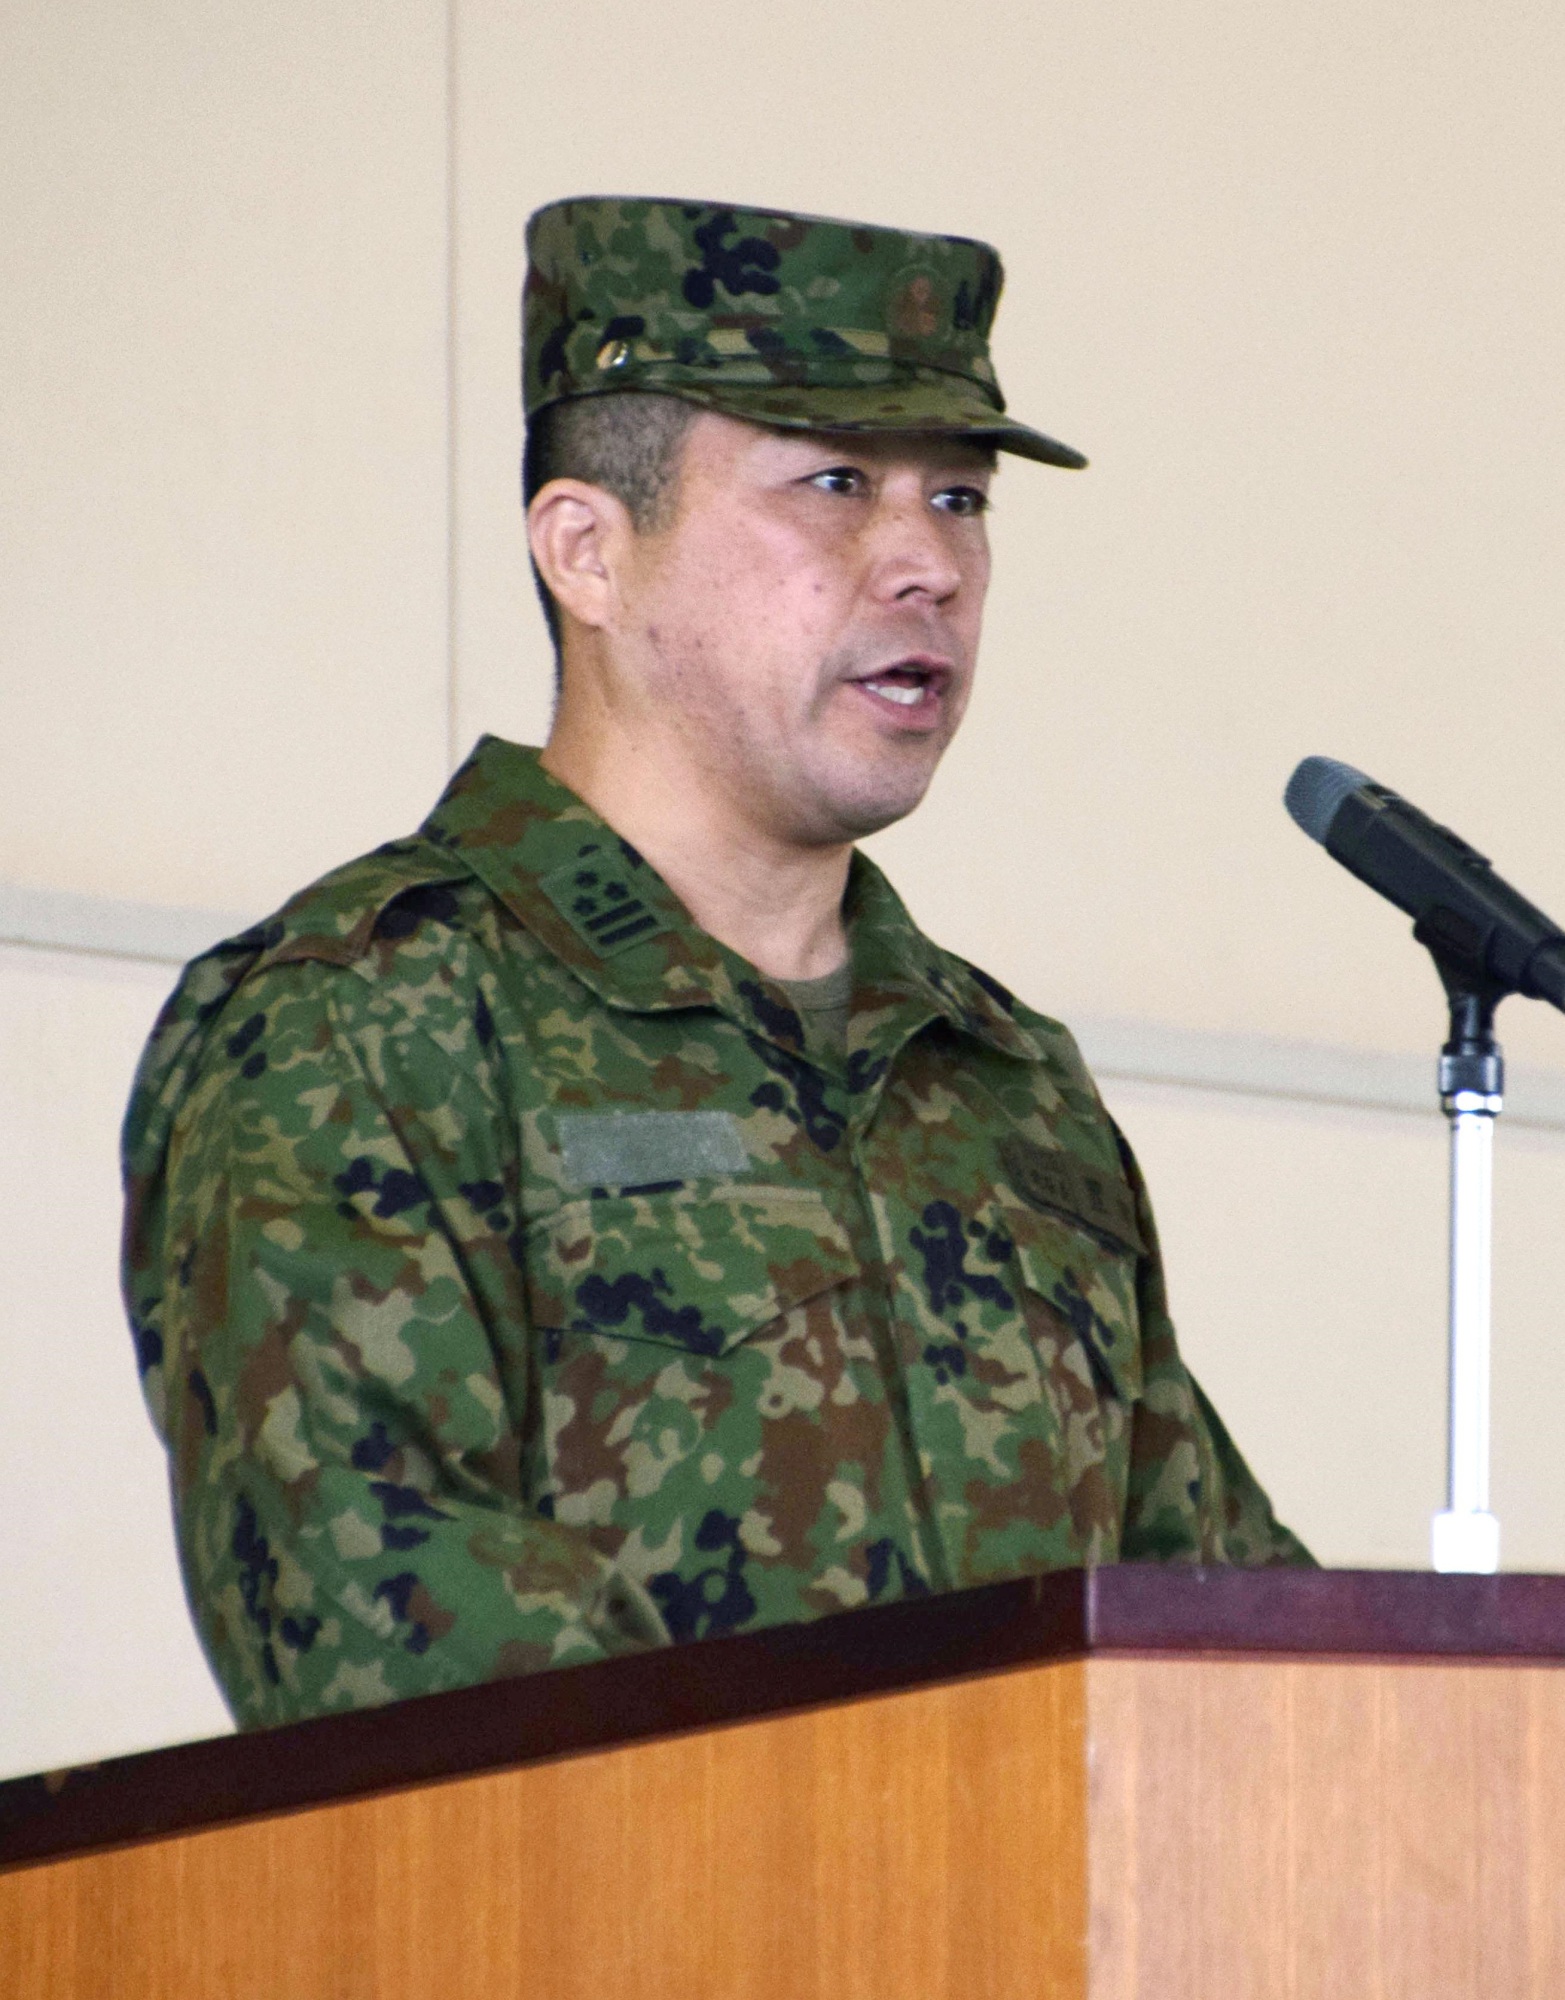 GSDF steps up preparations to create U.S. Marine Corps-like force - The ...